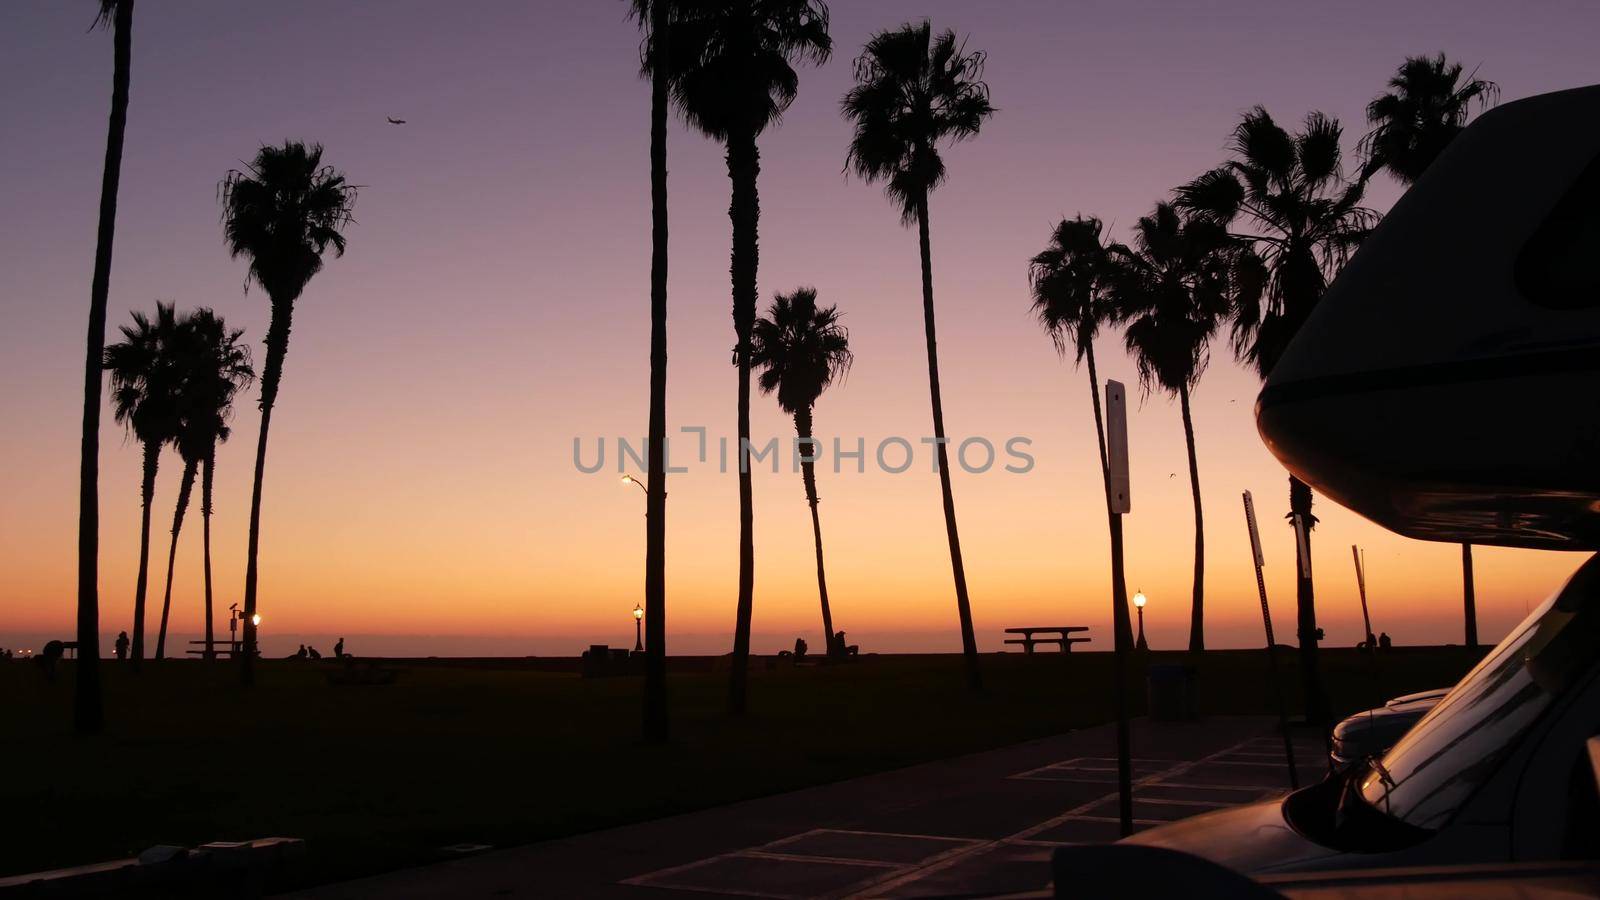 Motorhome trailer, caravan for road trip, palm trees, California beach at sunset by DogoraSun